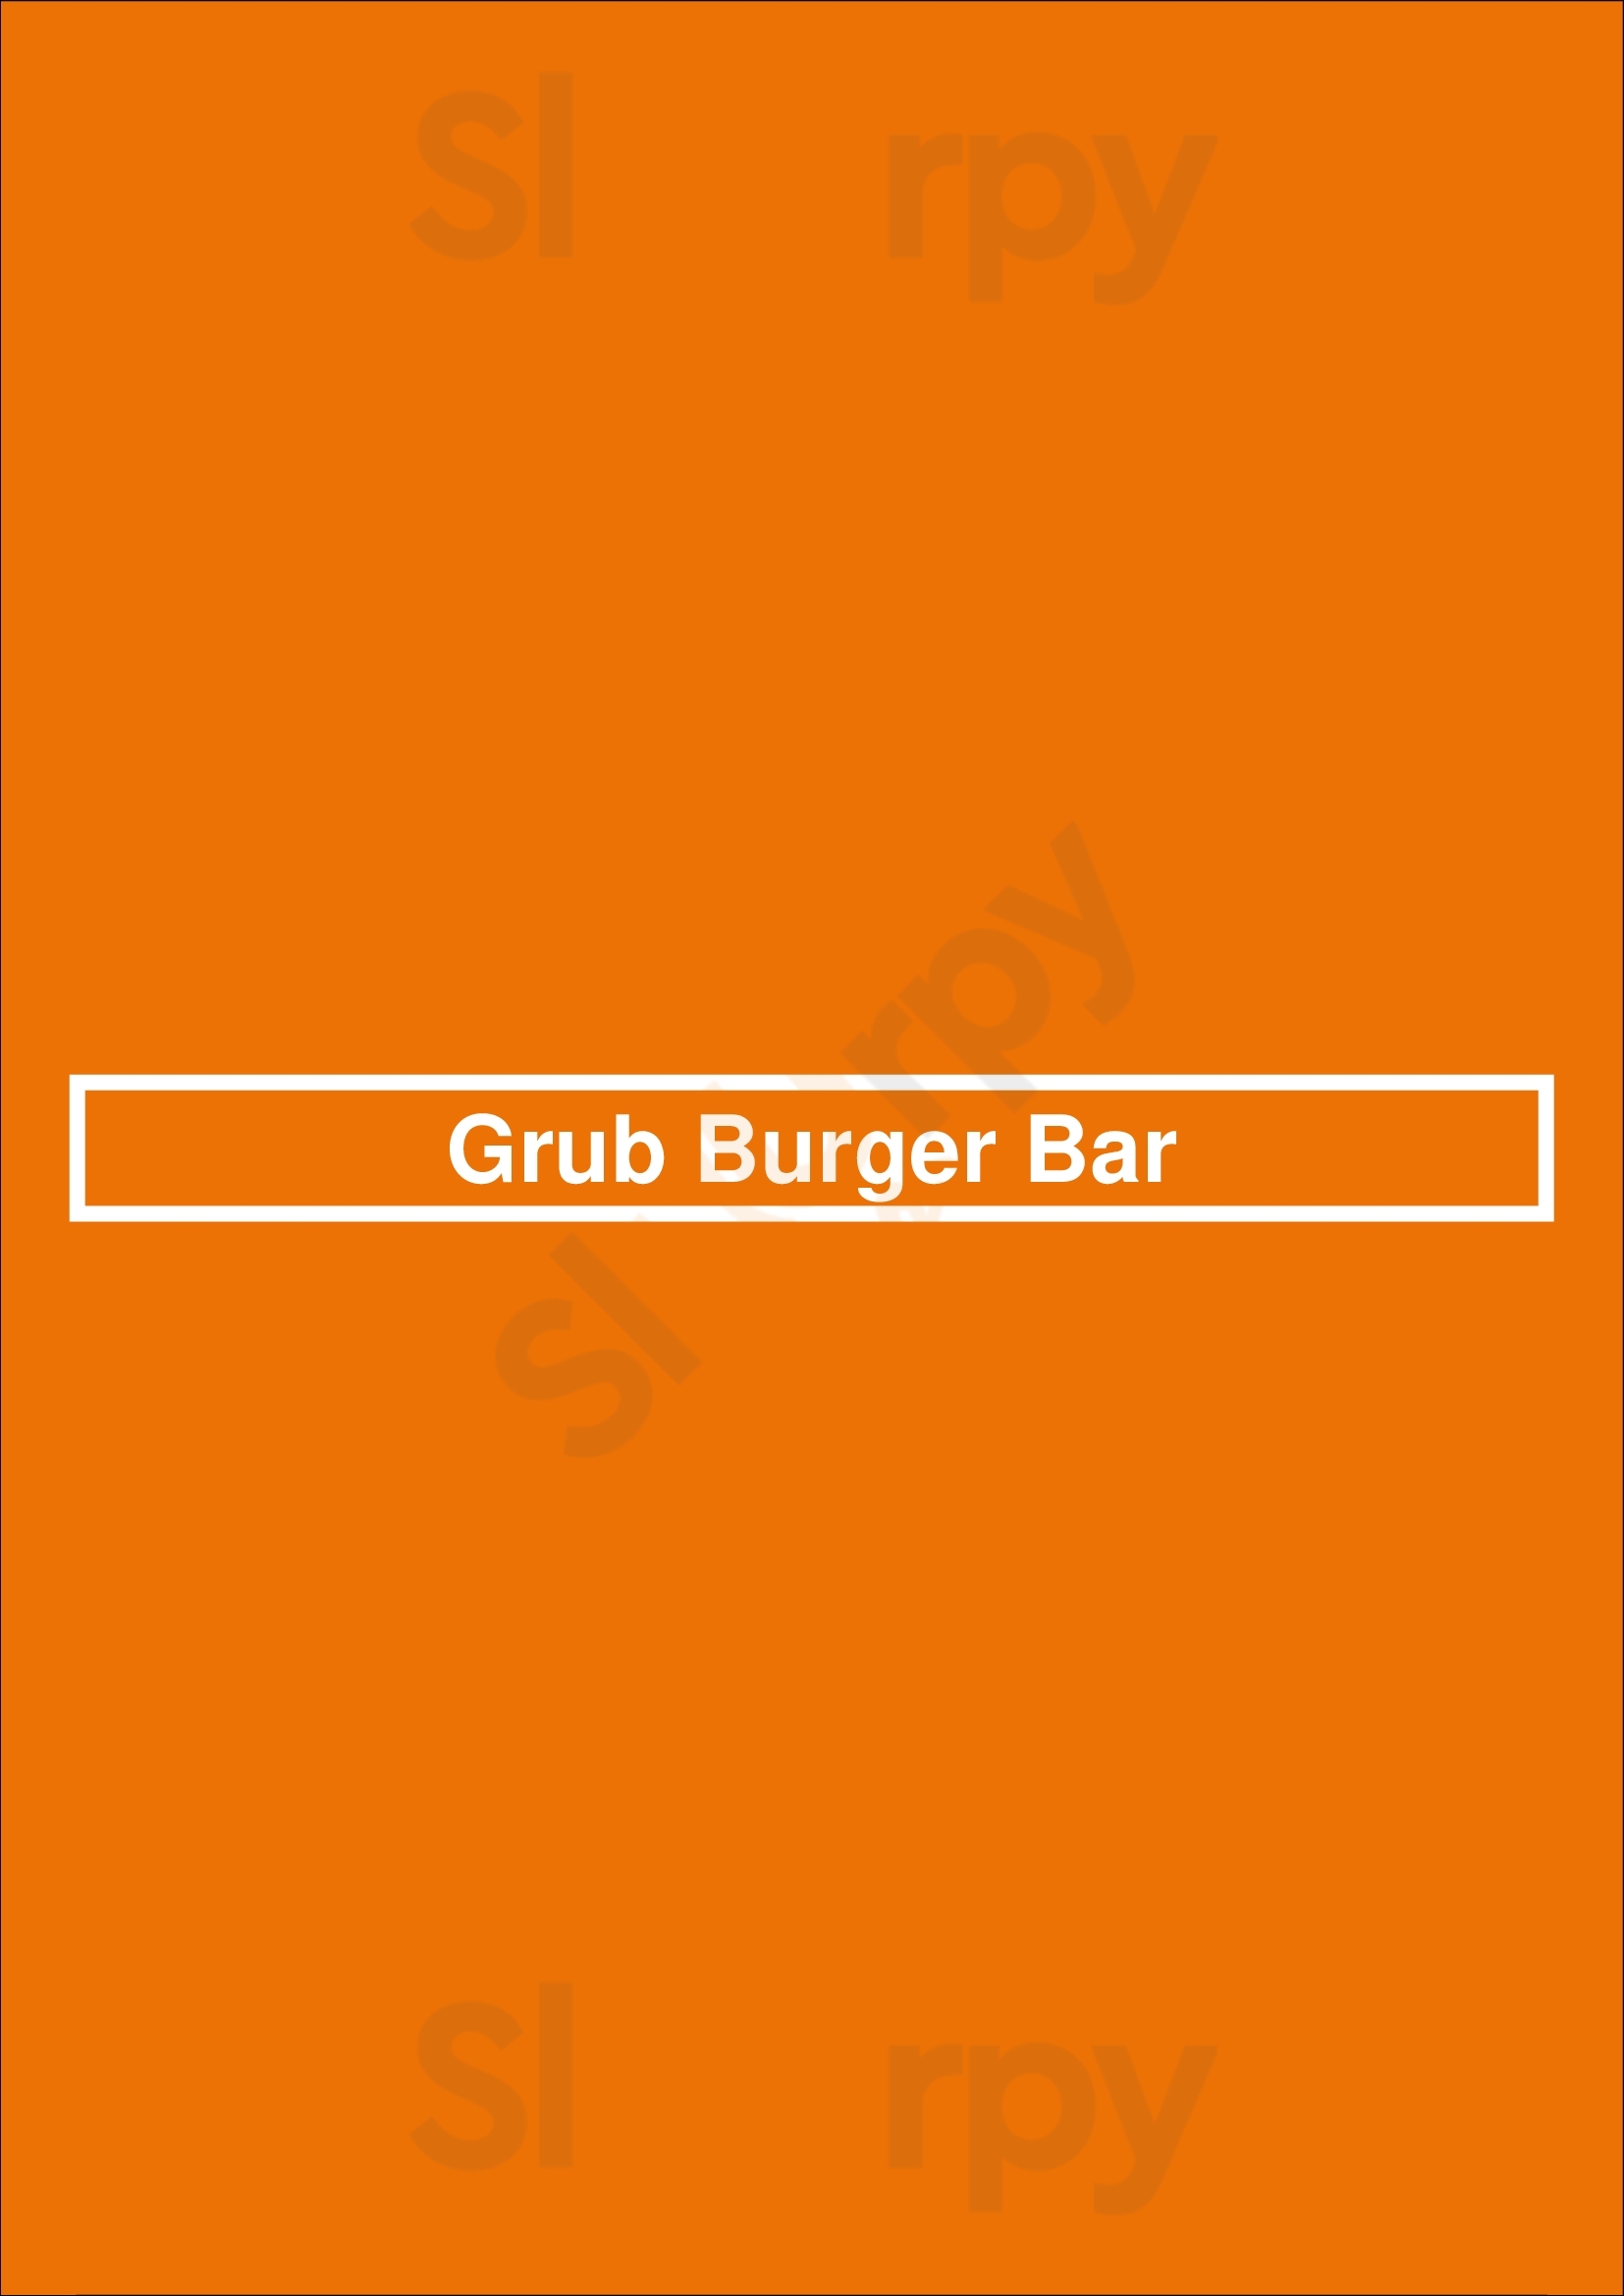 Grub Burger Bar Atlanta Menu - 1